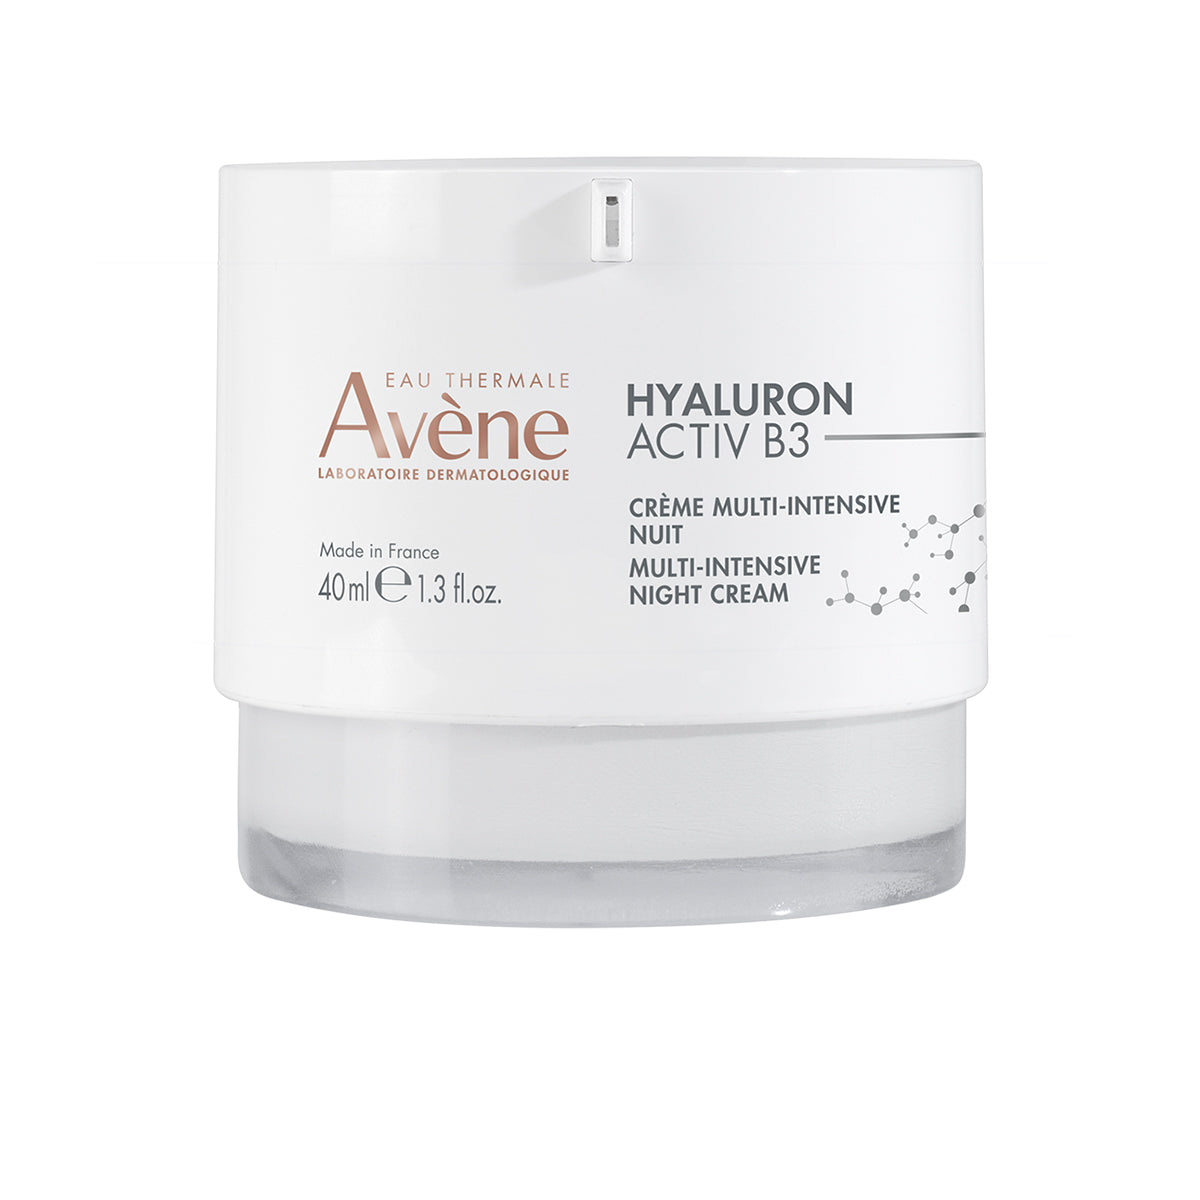 Avene Hyaluron active B3 crema de noche multi-intensiva 40ml.